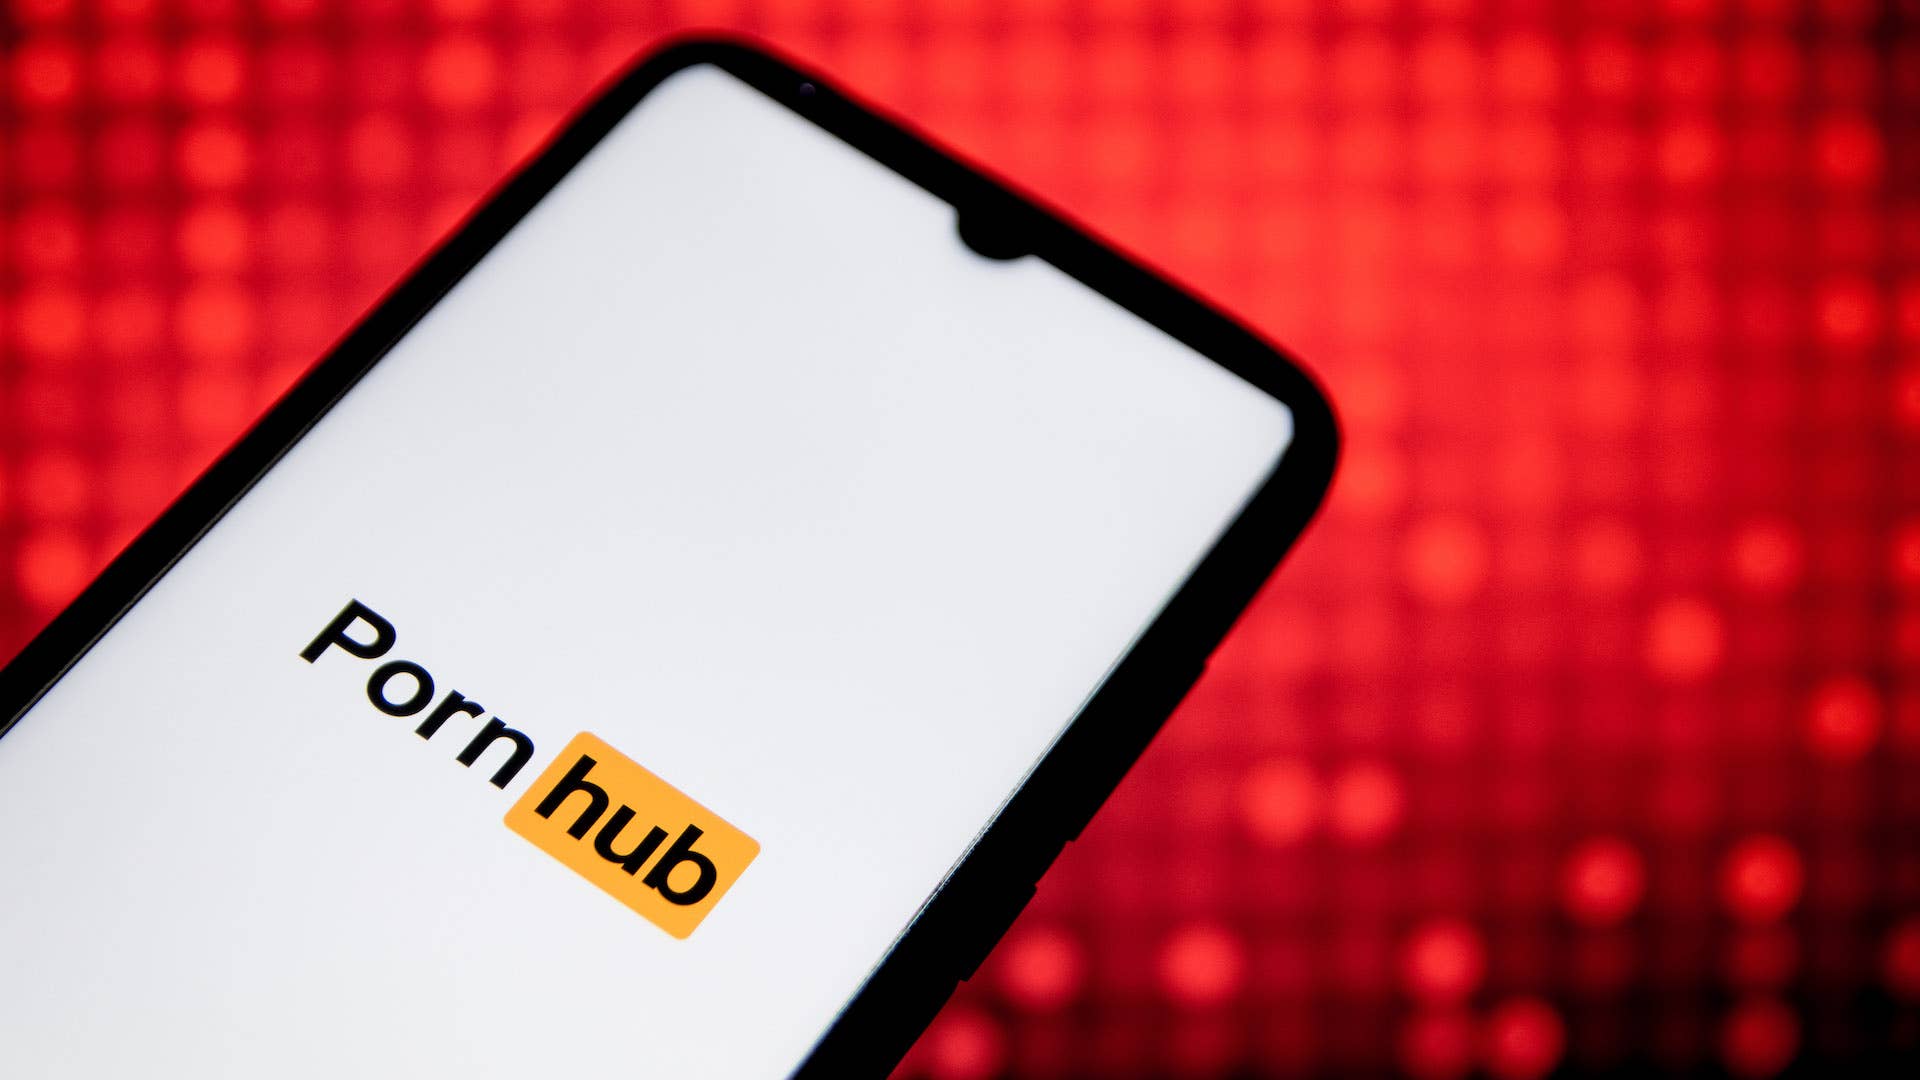 Photograph of Porn Hub logo on phone